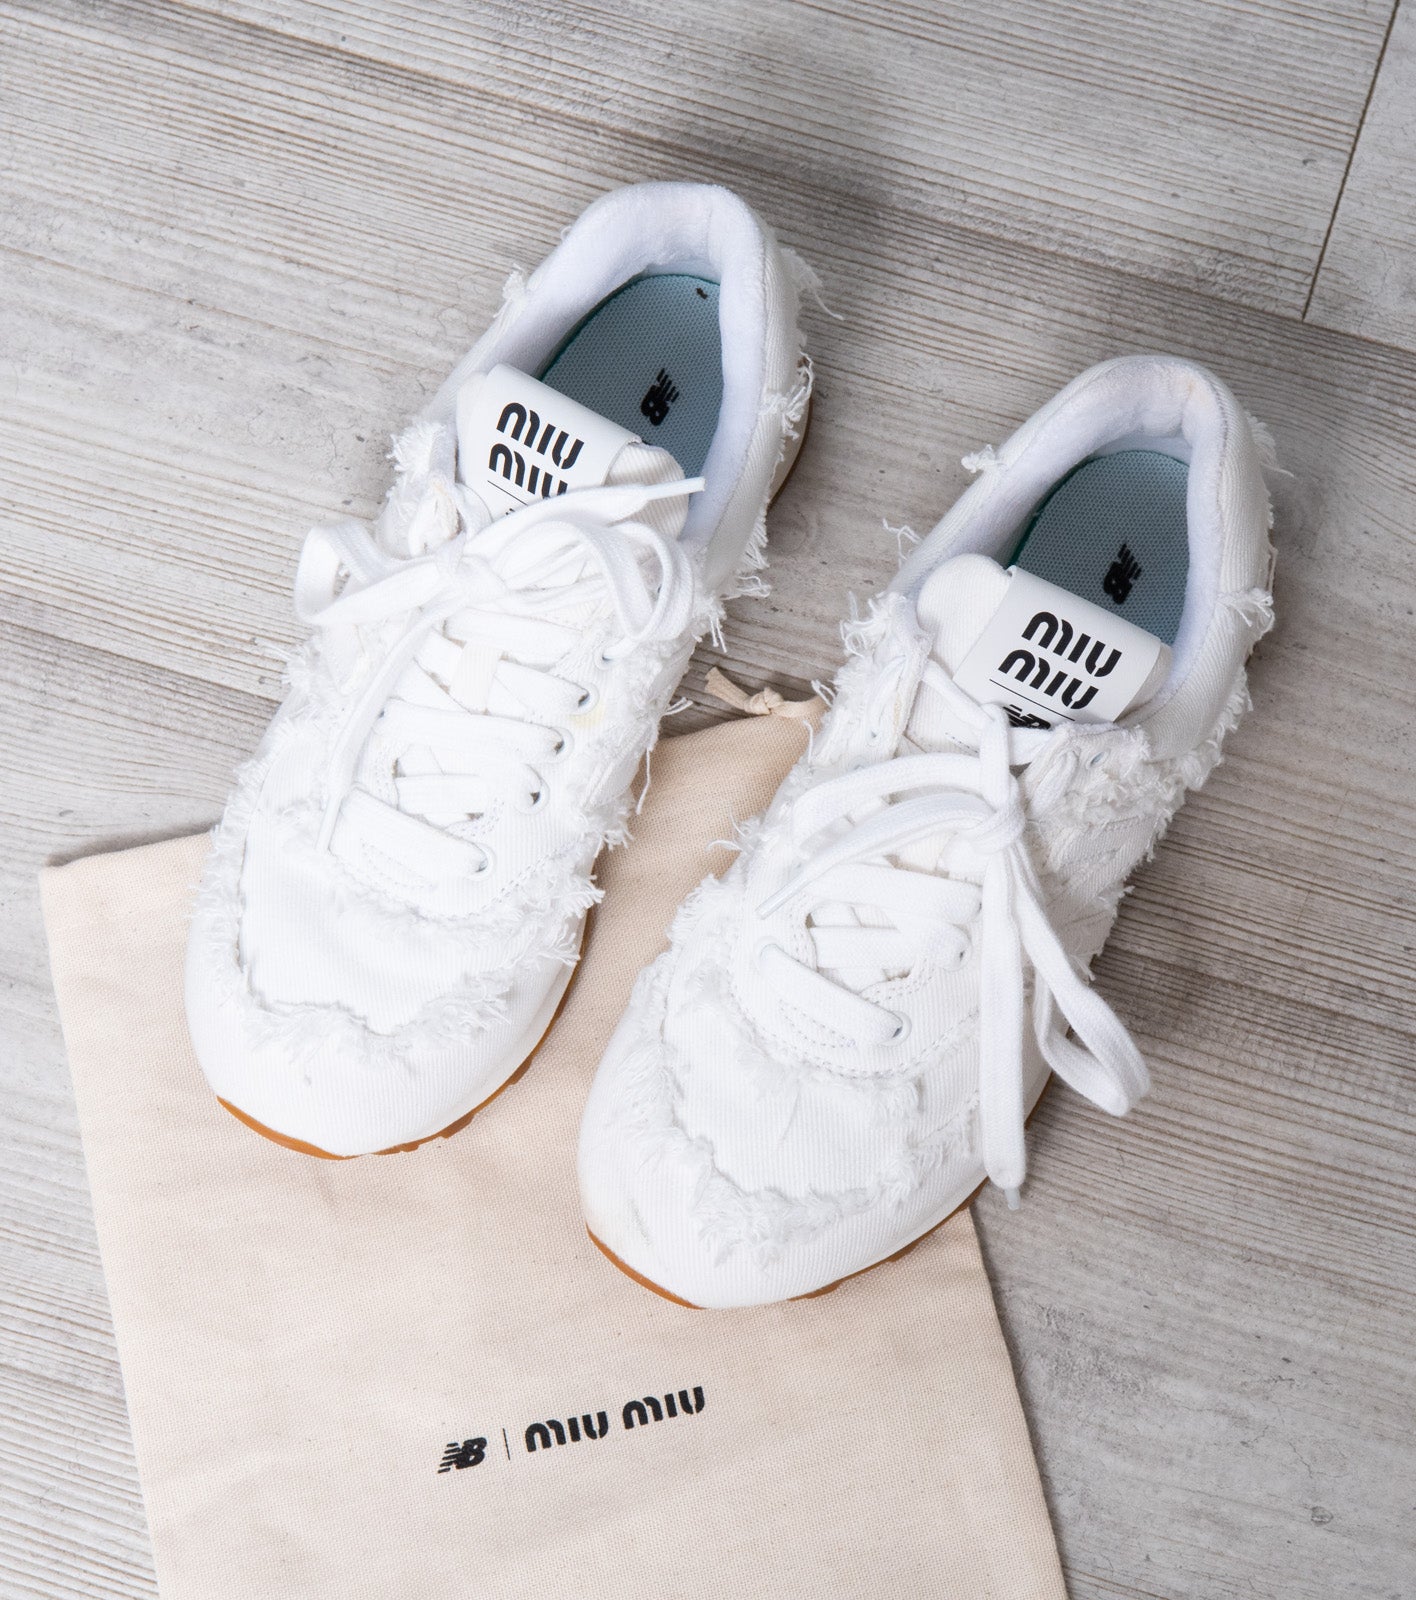 New Balance Miu Miu White Denim Sneakers - EVEYSPRELOVED